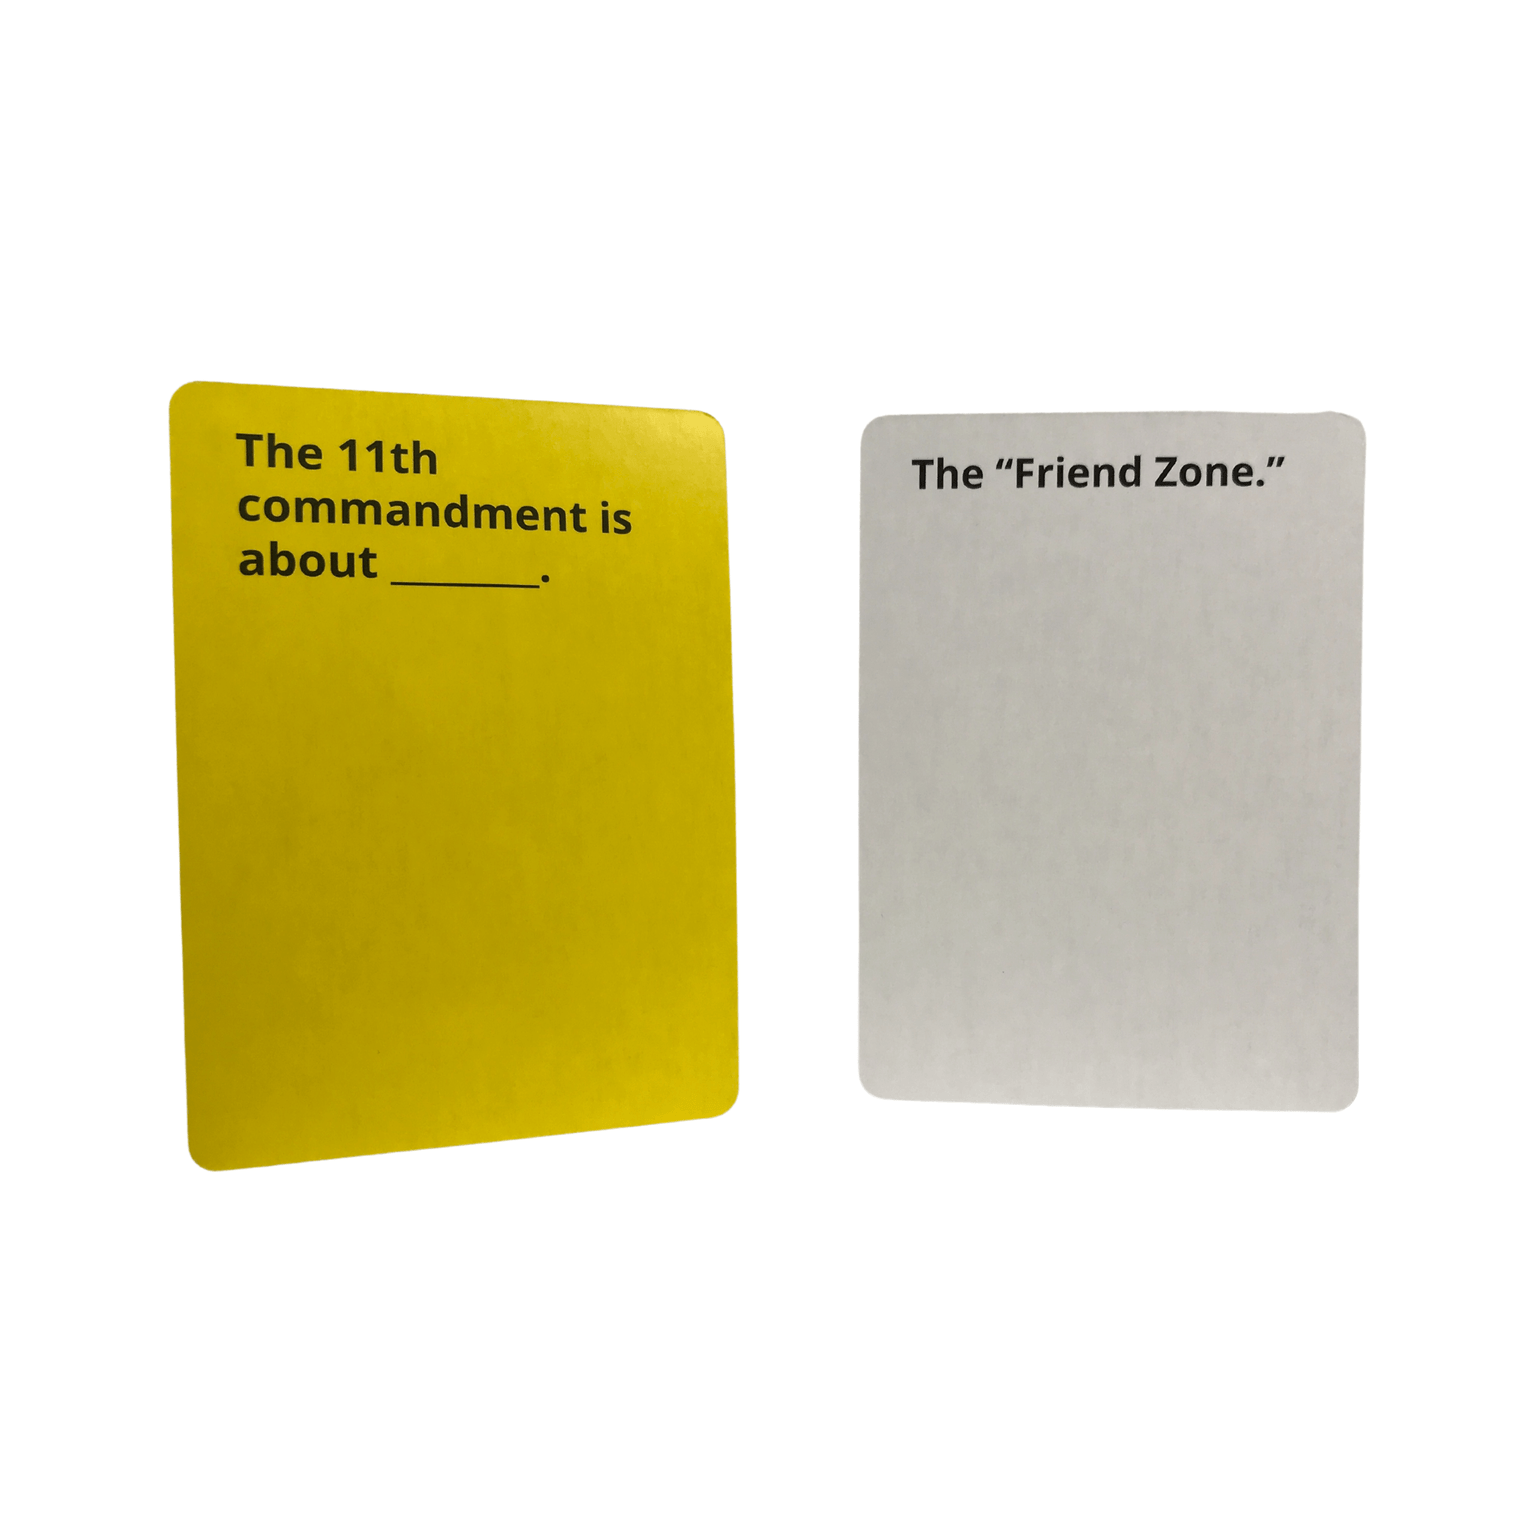 The Catholic Card Game